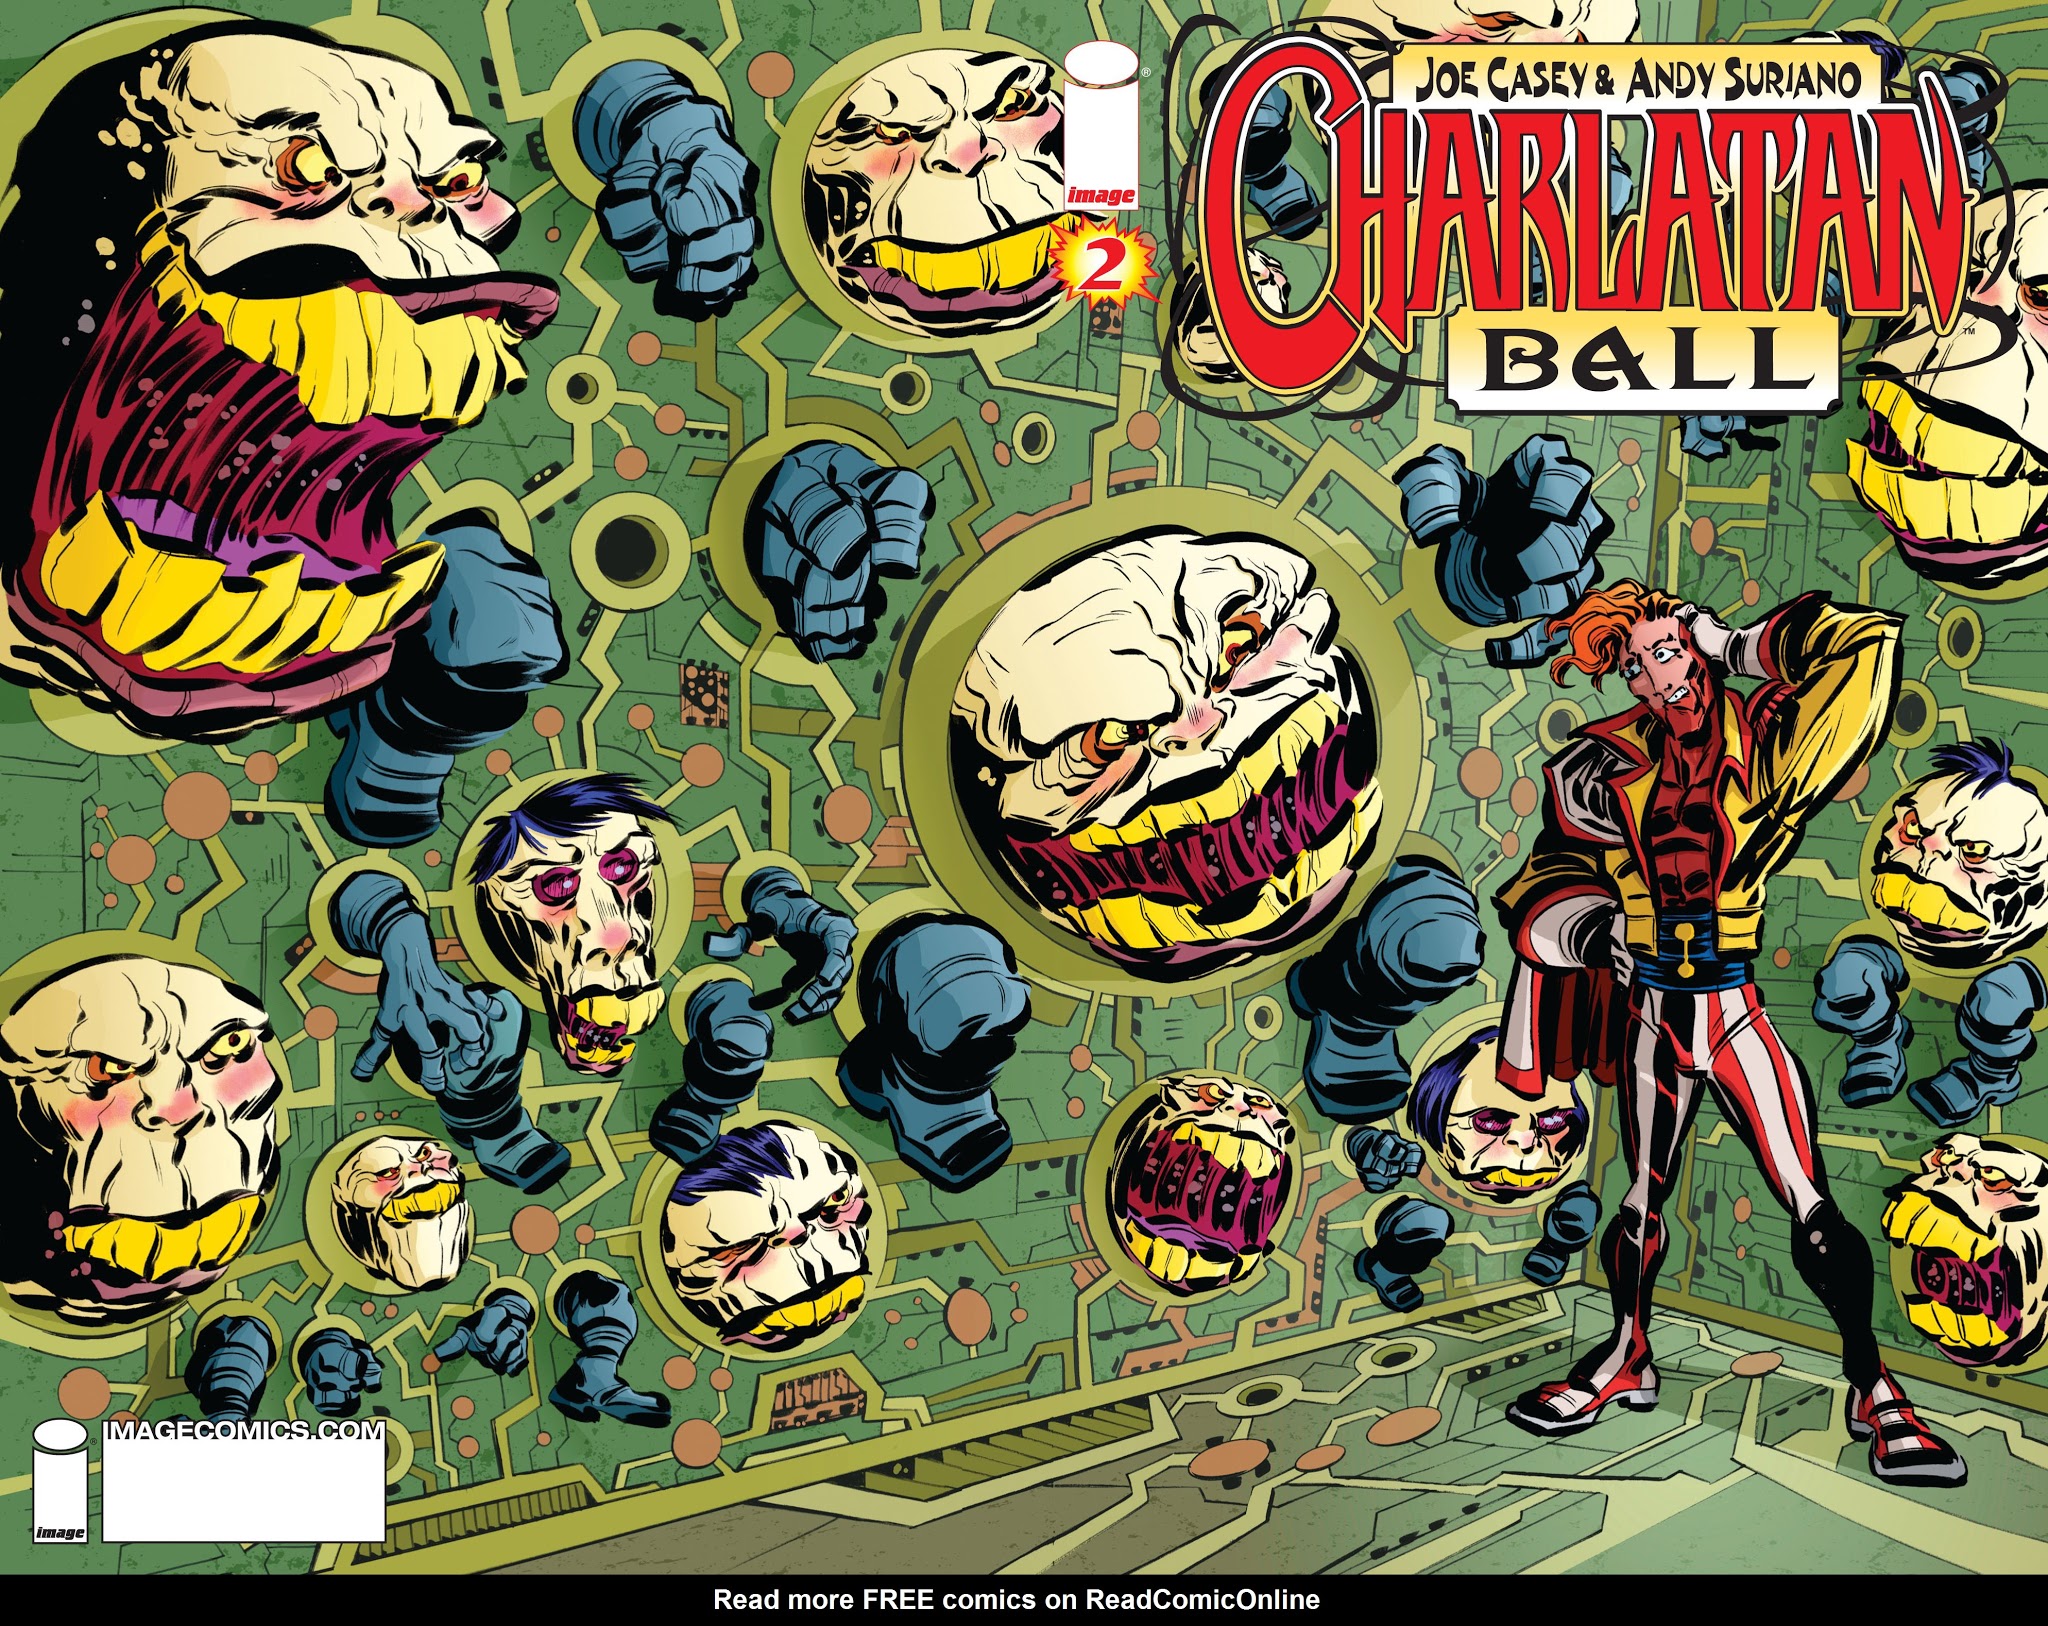 Read online Charlatan Ball comic -  Issue #2 - 1